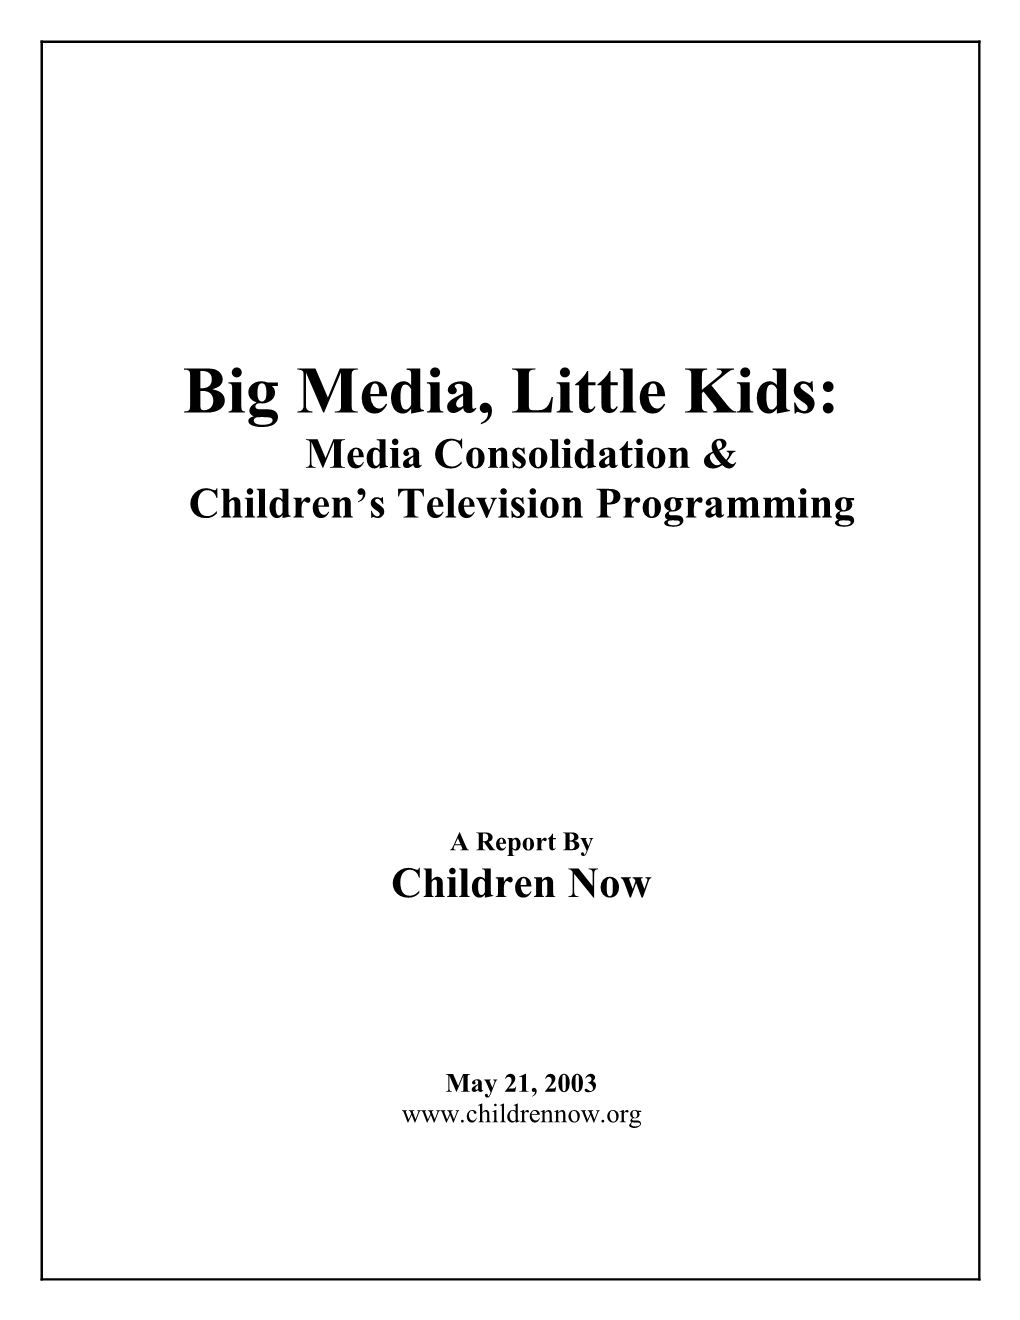 Big Media, Little Kids: Media Consolidation & Children’S Television Programming